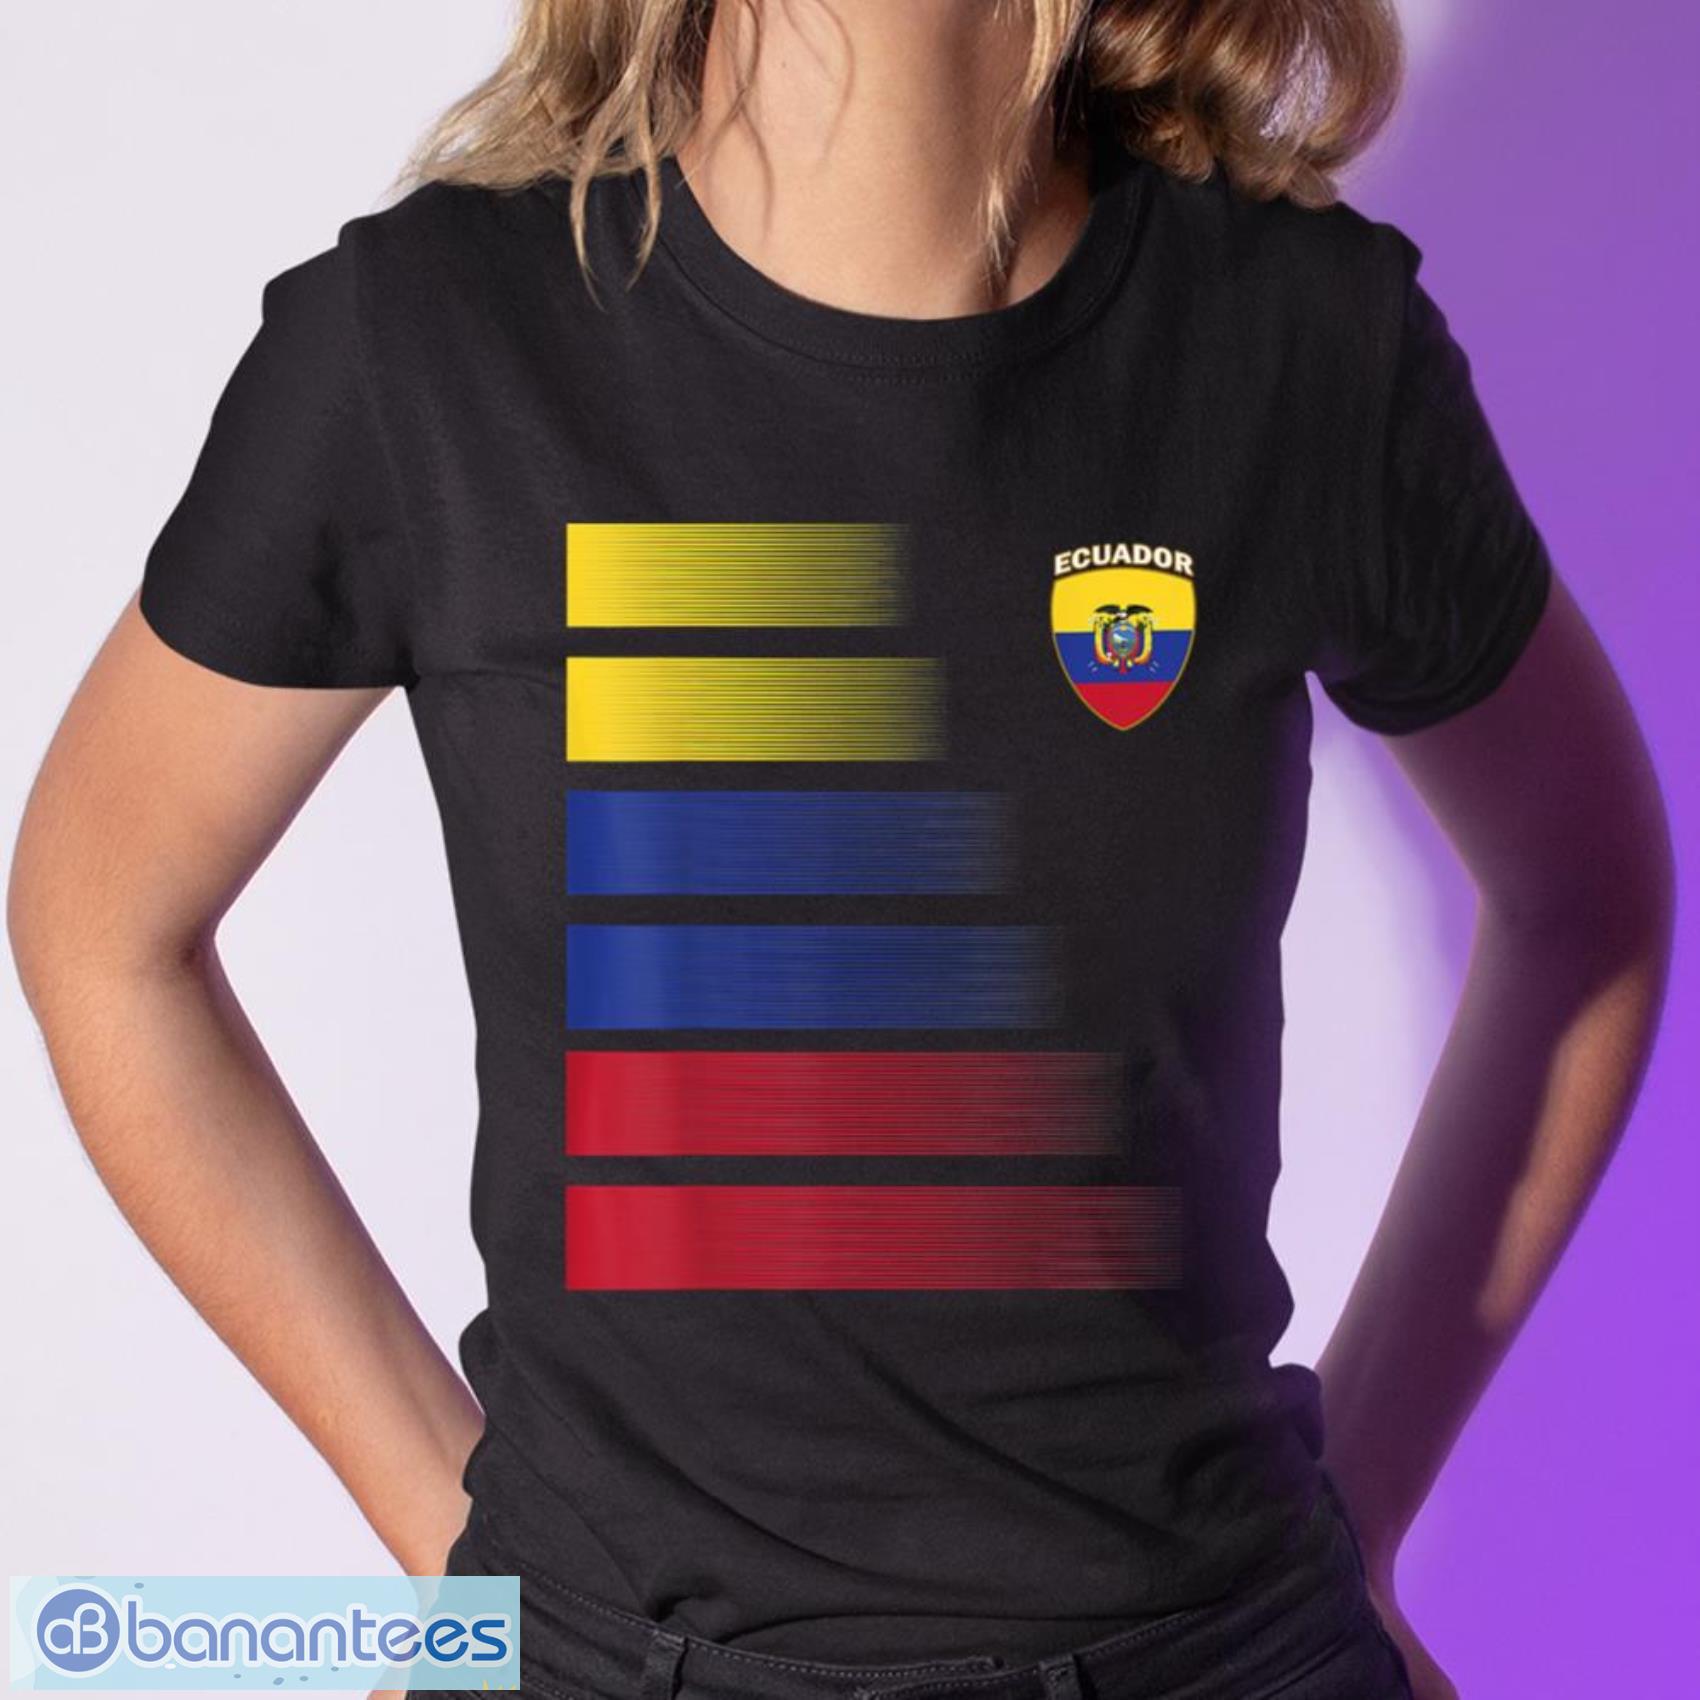 ecuador national football team jersey